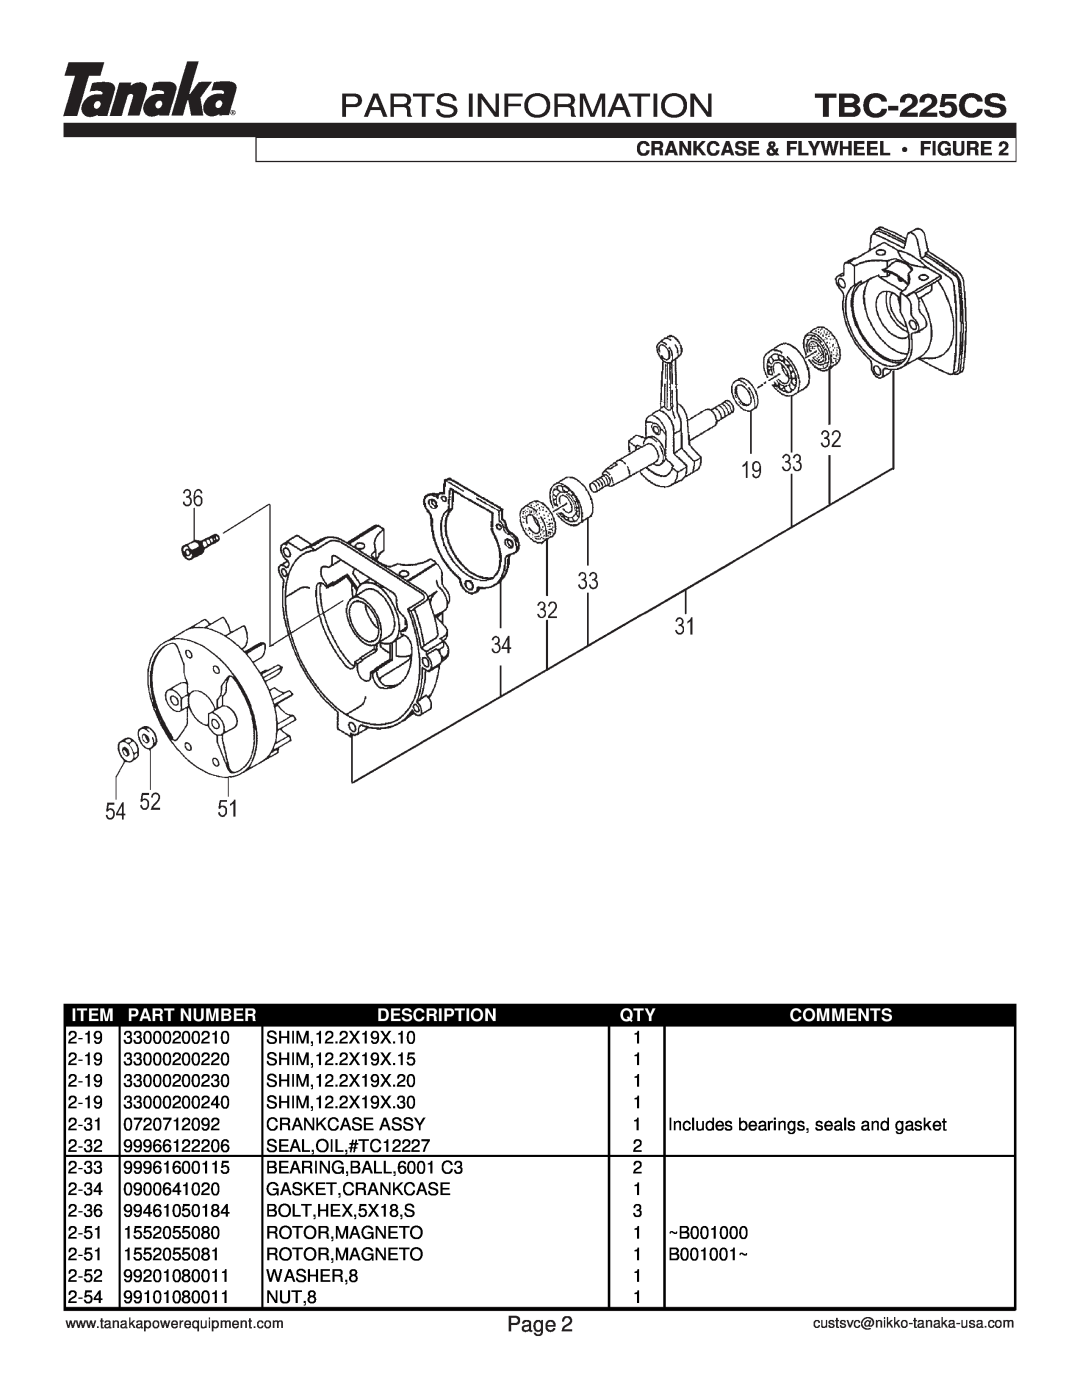 Tanaka manual PARTS INFORMATION TBC-225CS, Crankcase & Flywheel Figure, Page, Part Number, Description, Comments 